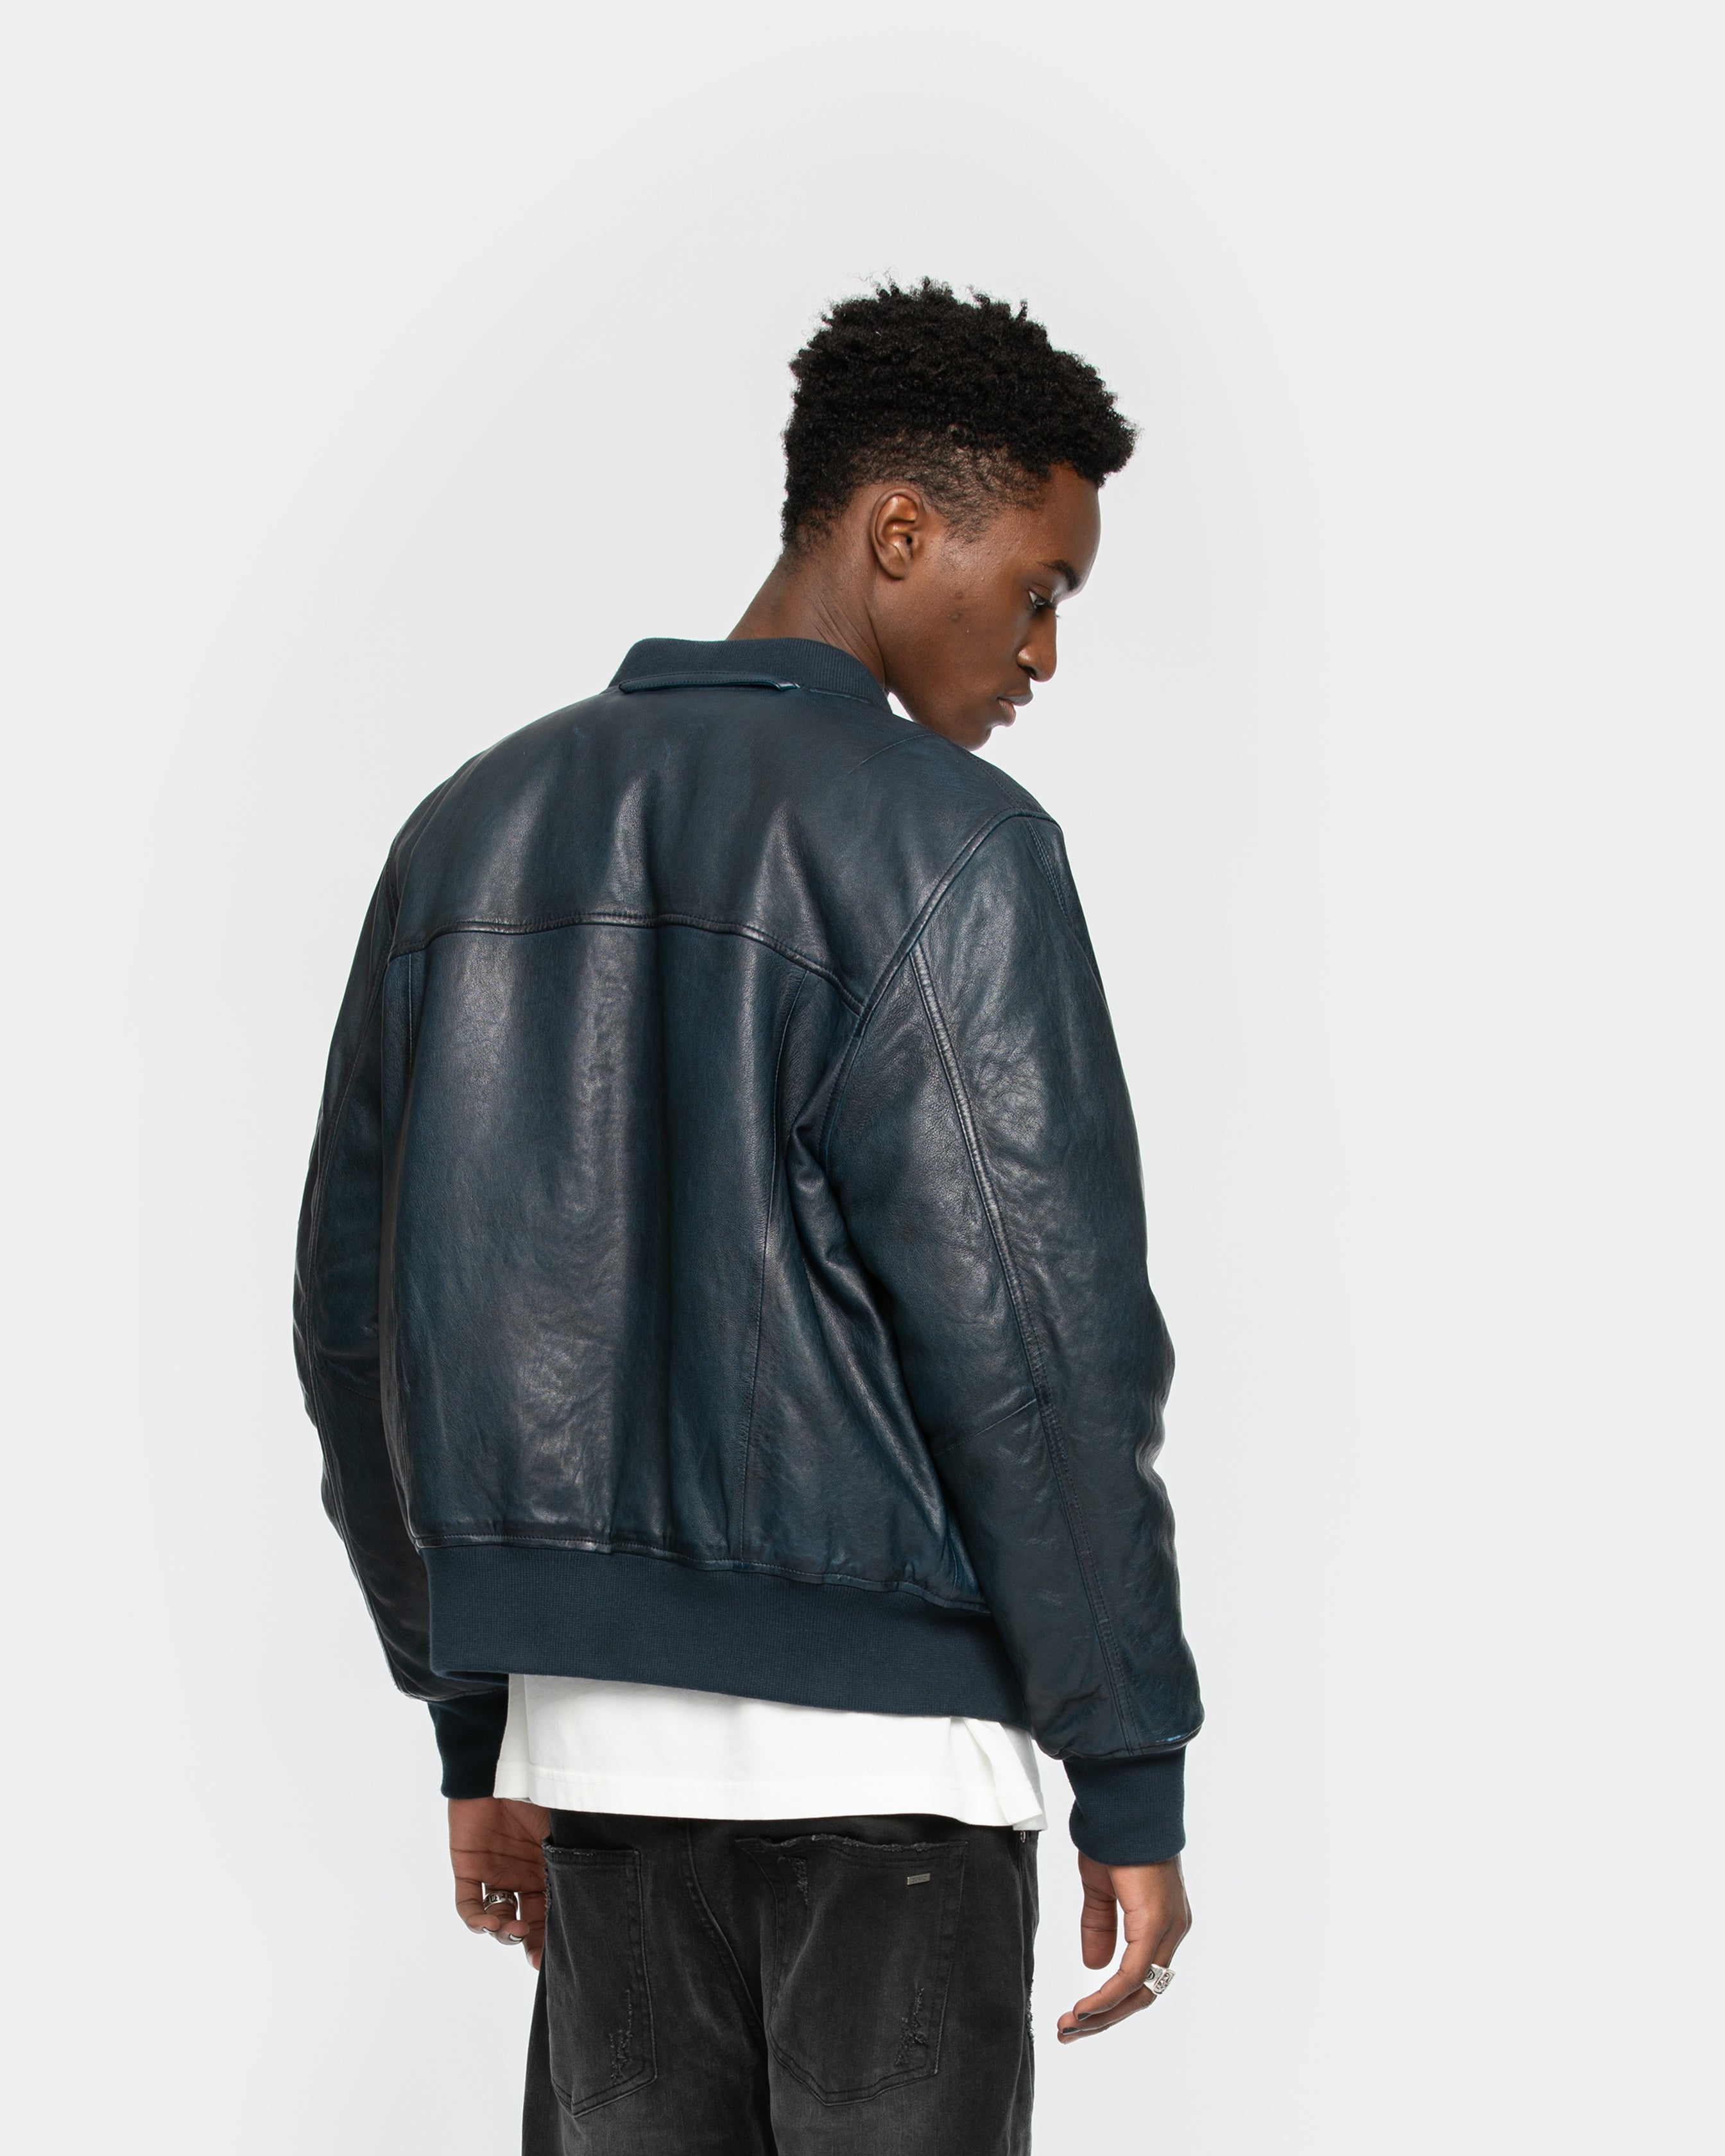 LPJAM Fashion Ryan Gosling Blue Bomber Jacket | The Chase for Blue Genuine Leather  Jacket For Men at Amazon Men's Clothing store